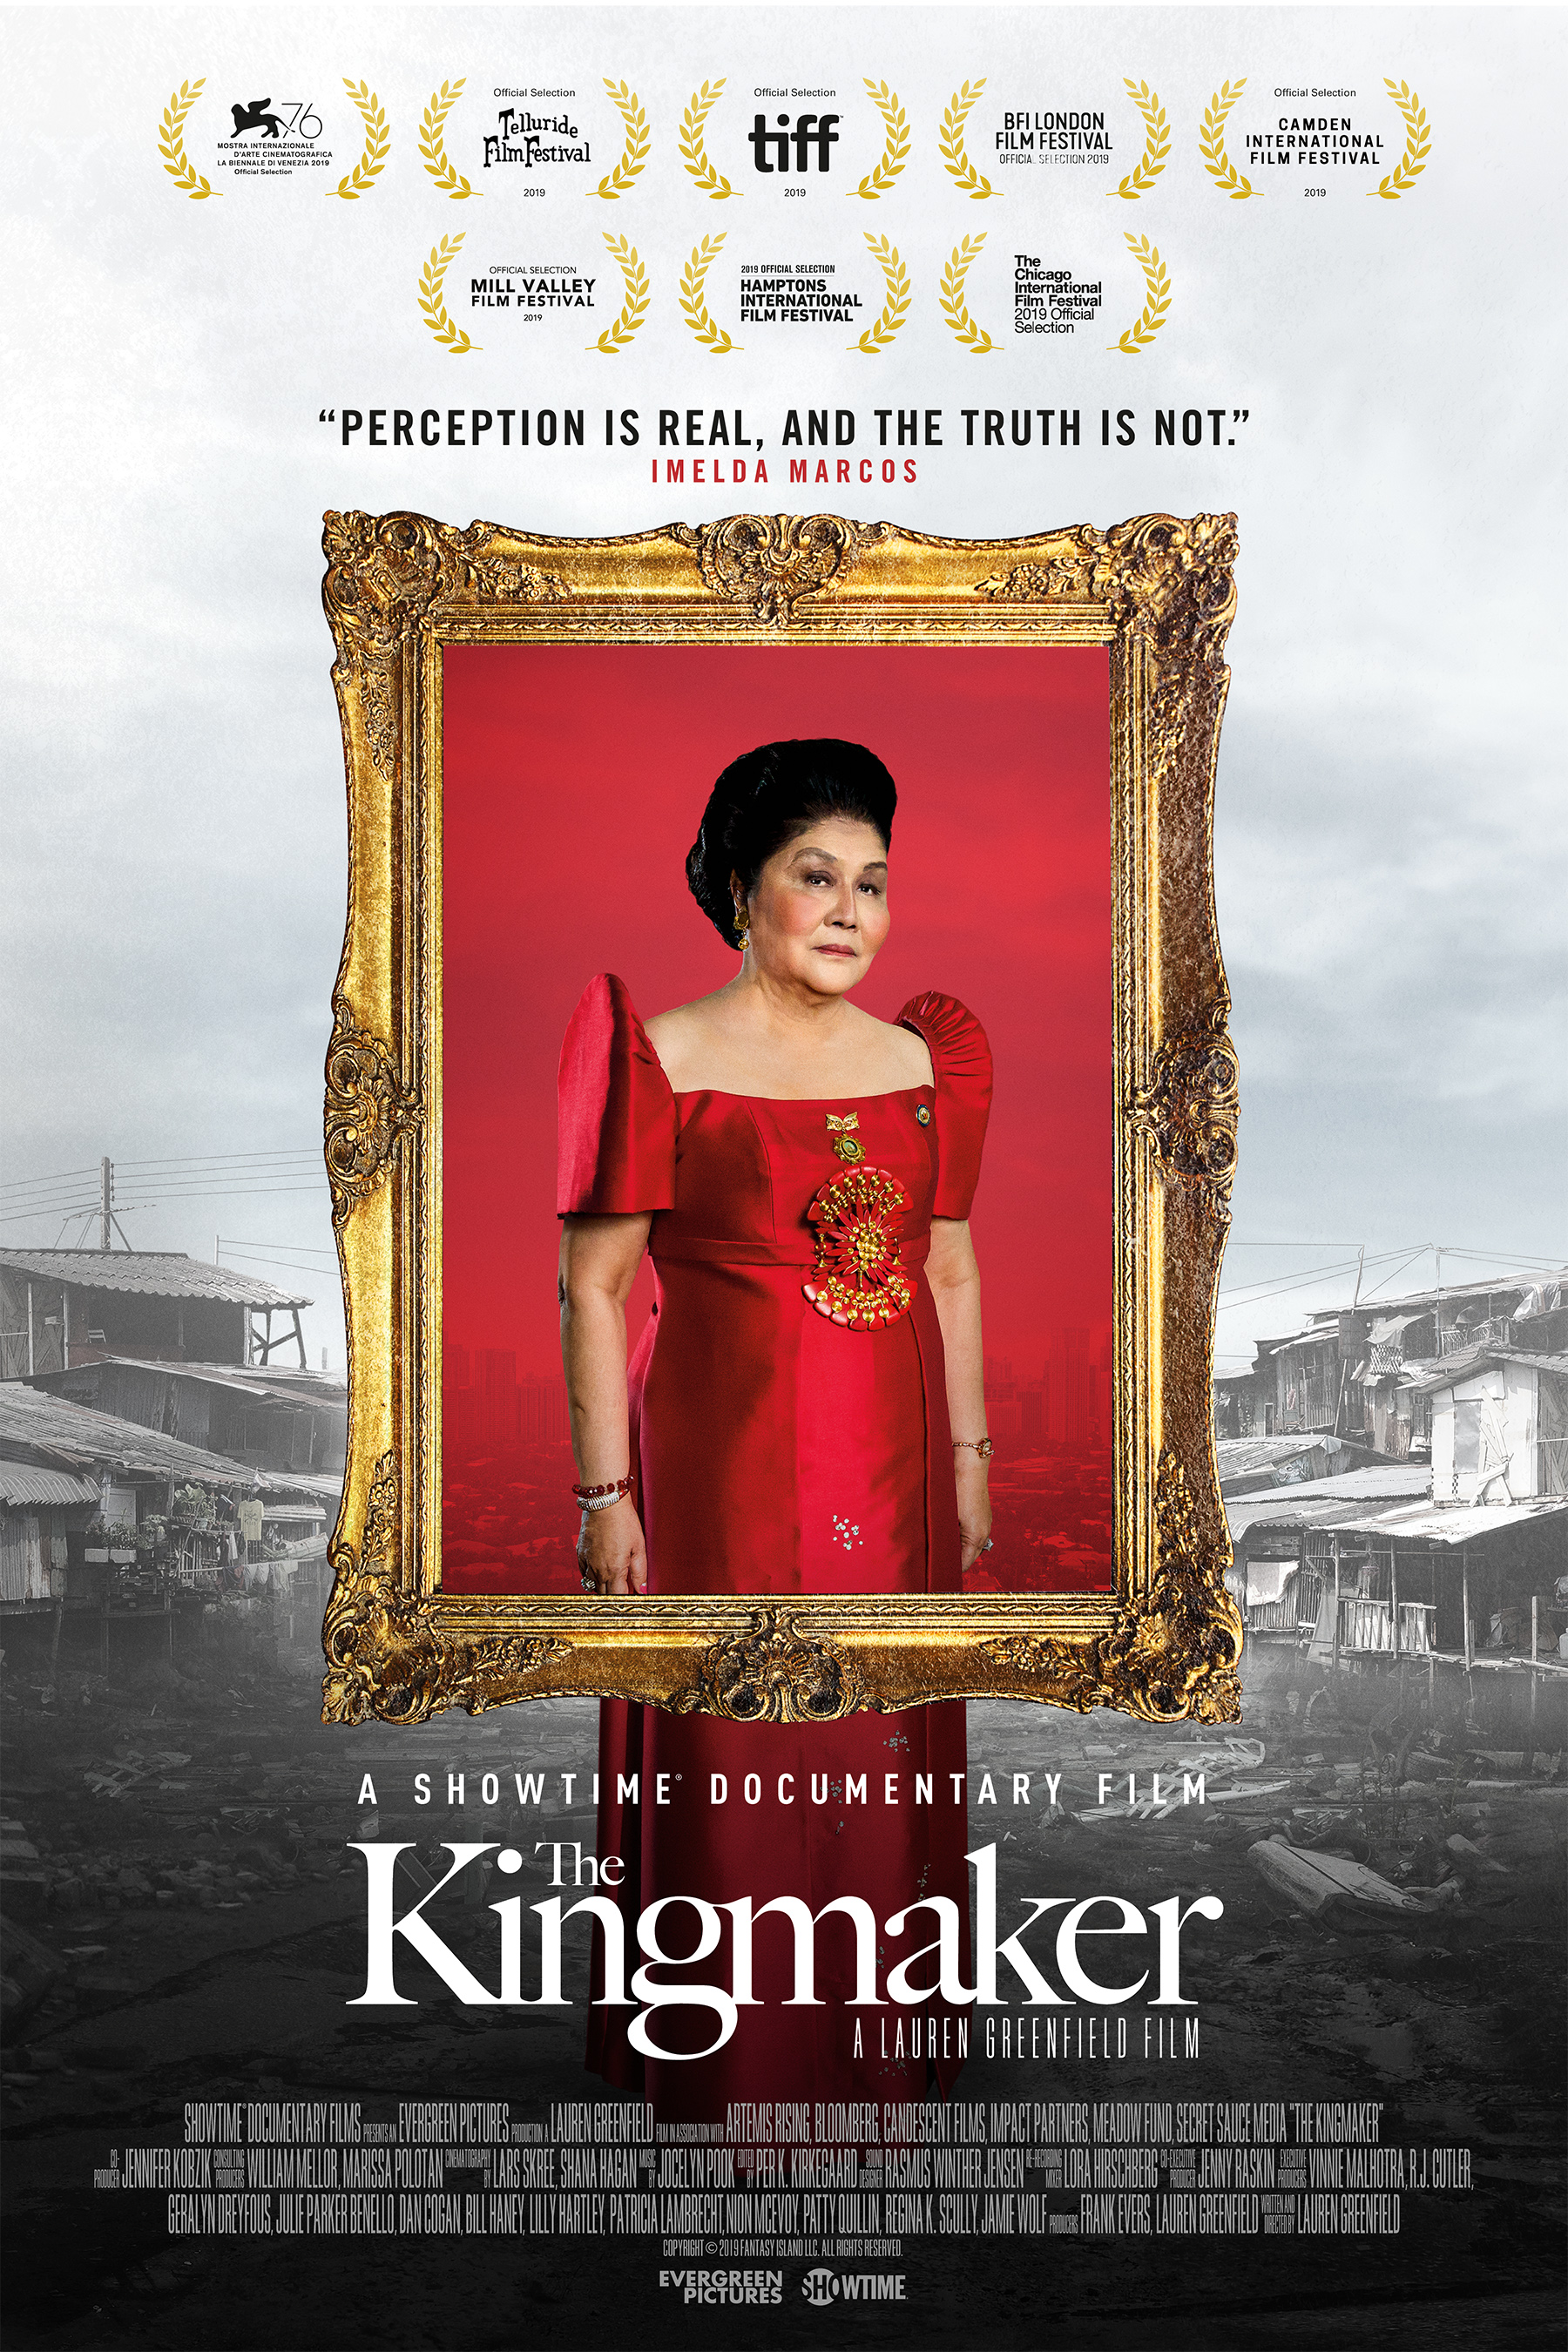 Poster for Showtime documentary 'The Kingmaker'